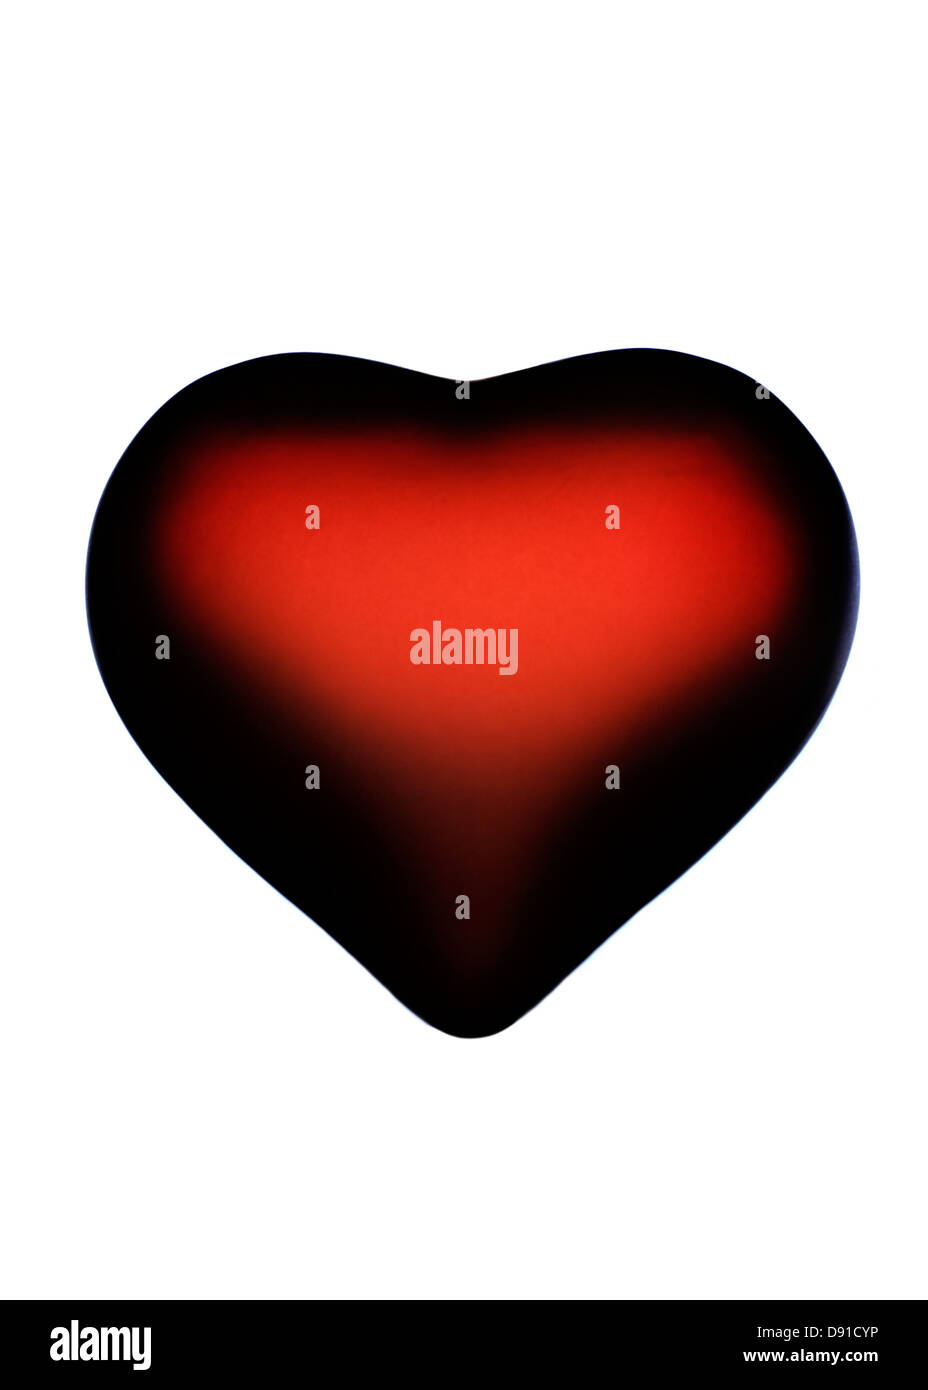 Red heart shape symbol against white background Stock Photo